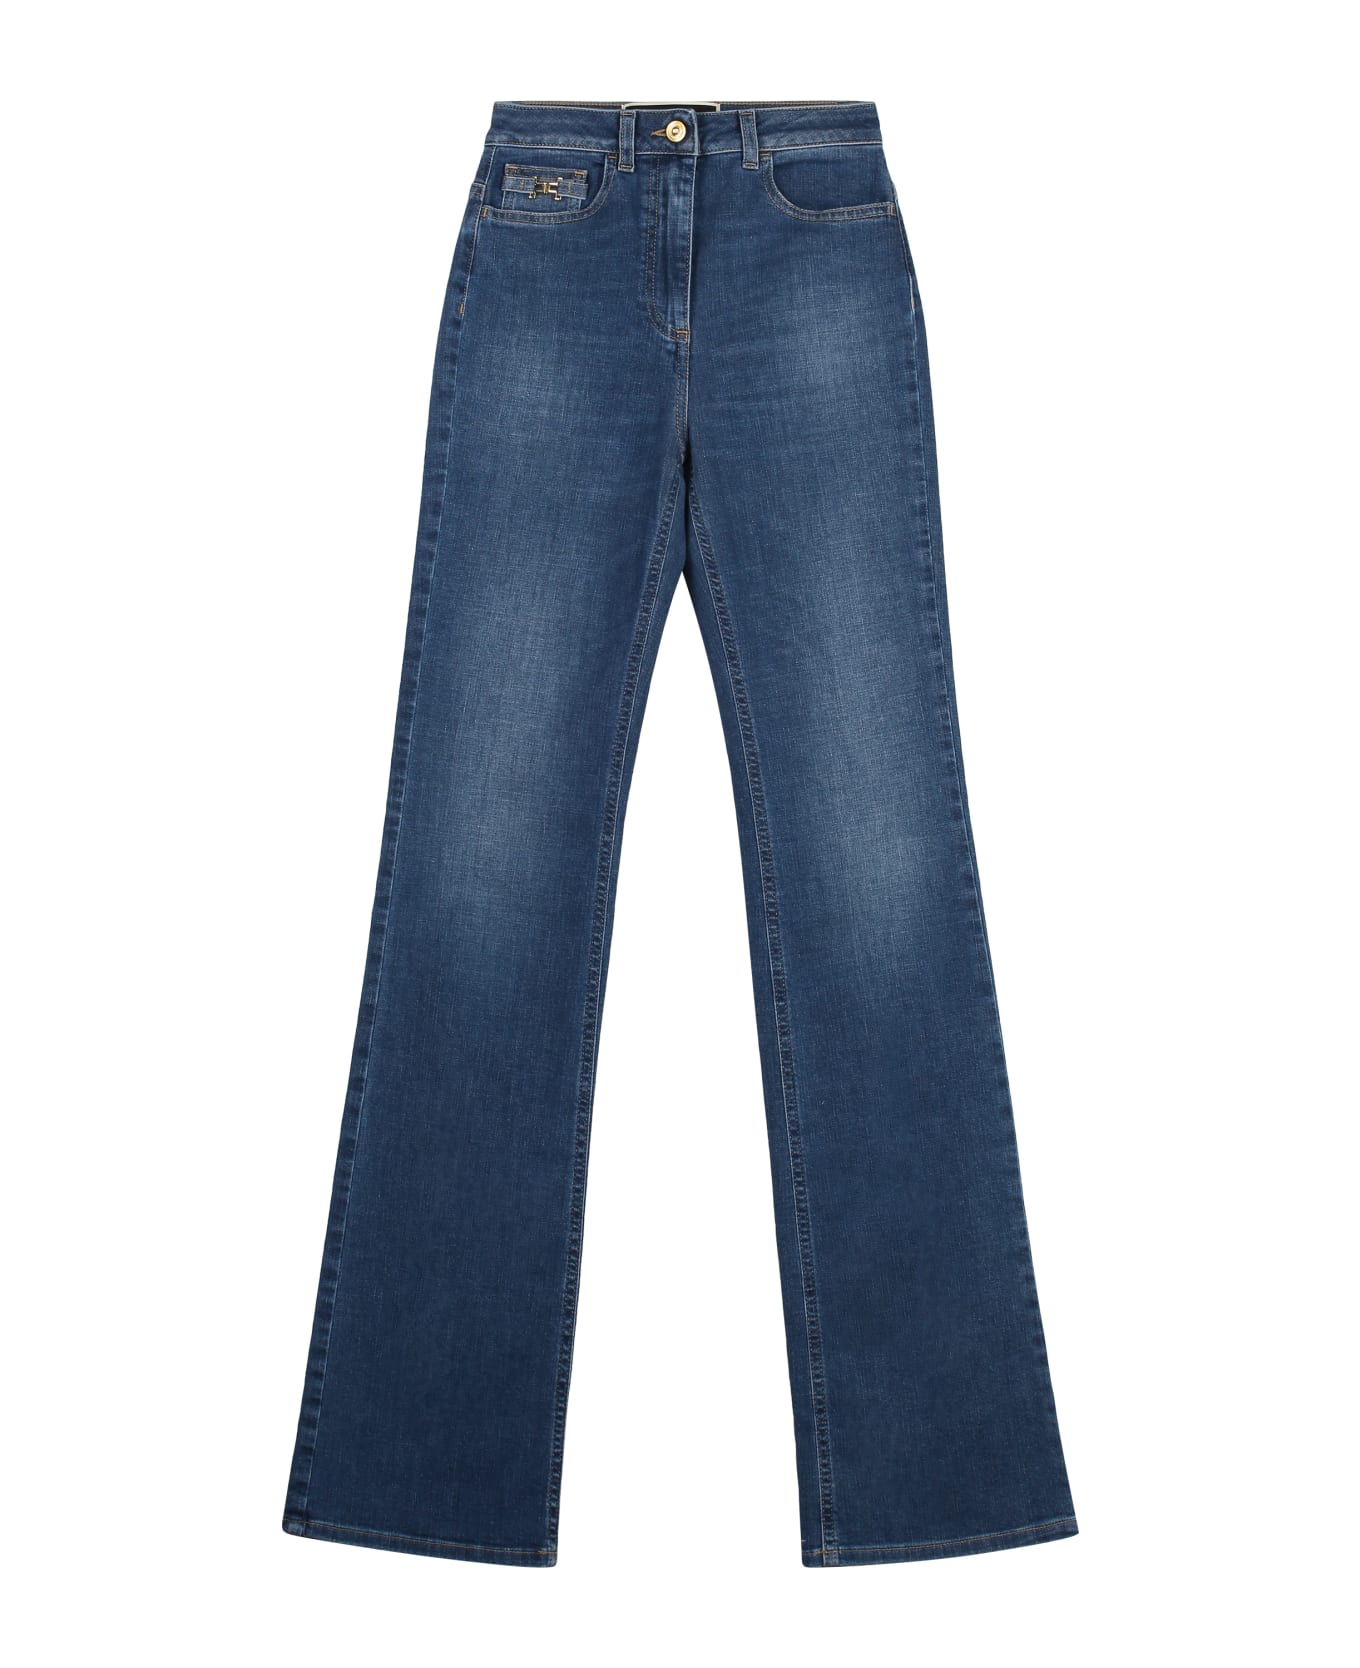 Elisabetta Franchi High-rise Flared Jeans - Blue denim